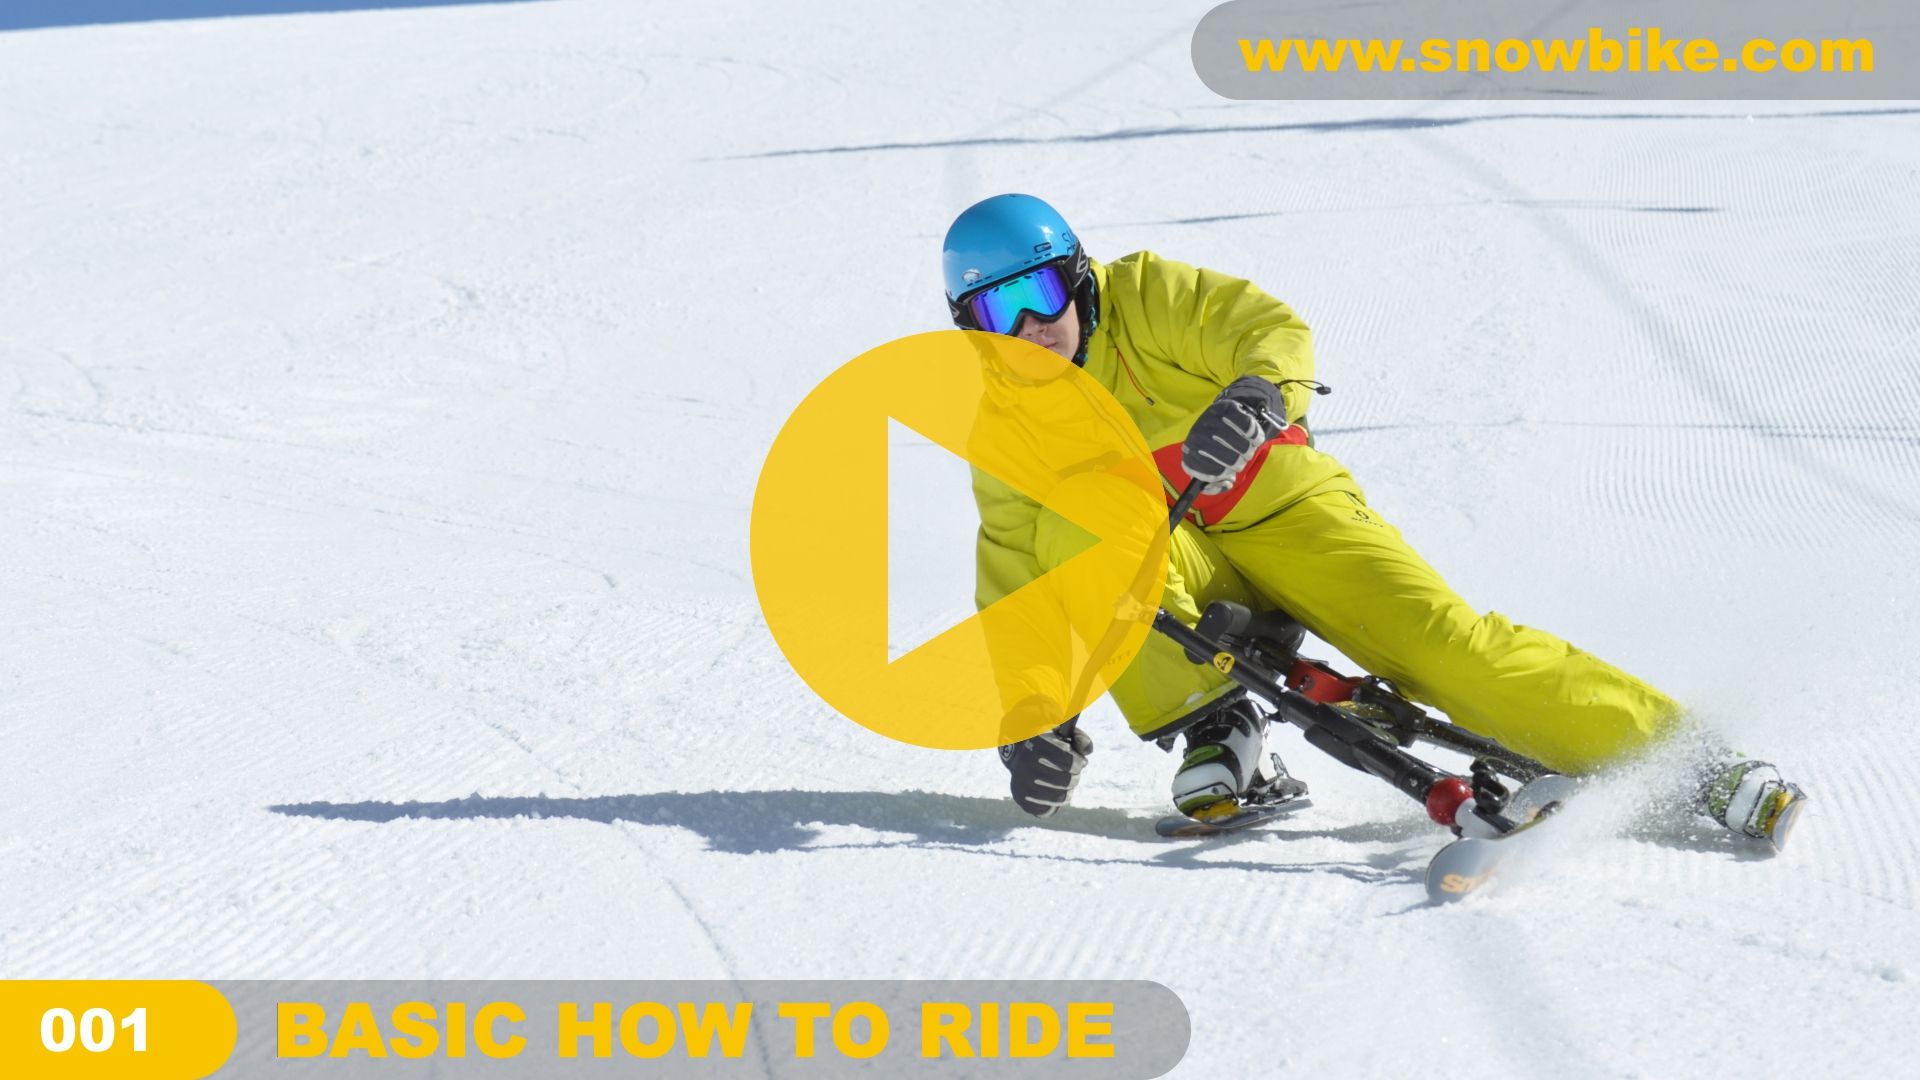 snowbike-basics-how-to-ride-cover4D4DD86E-951B-B813-7CC0-492F68862850.jpg